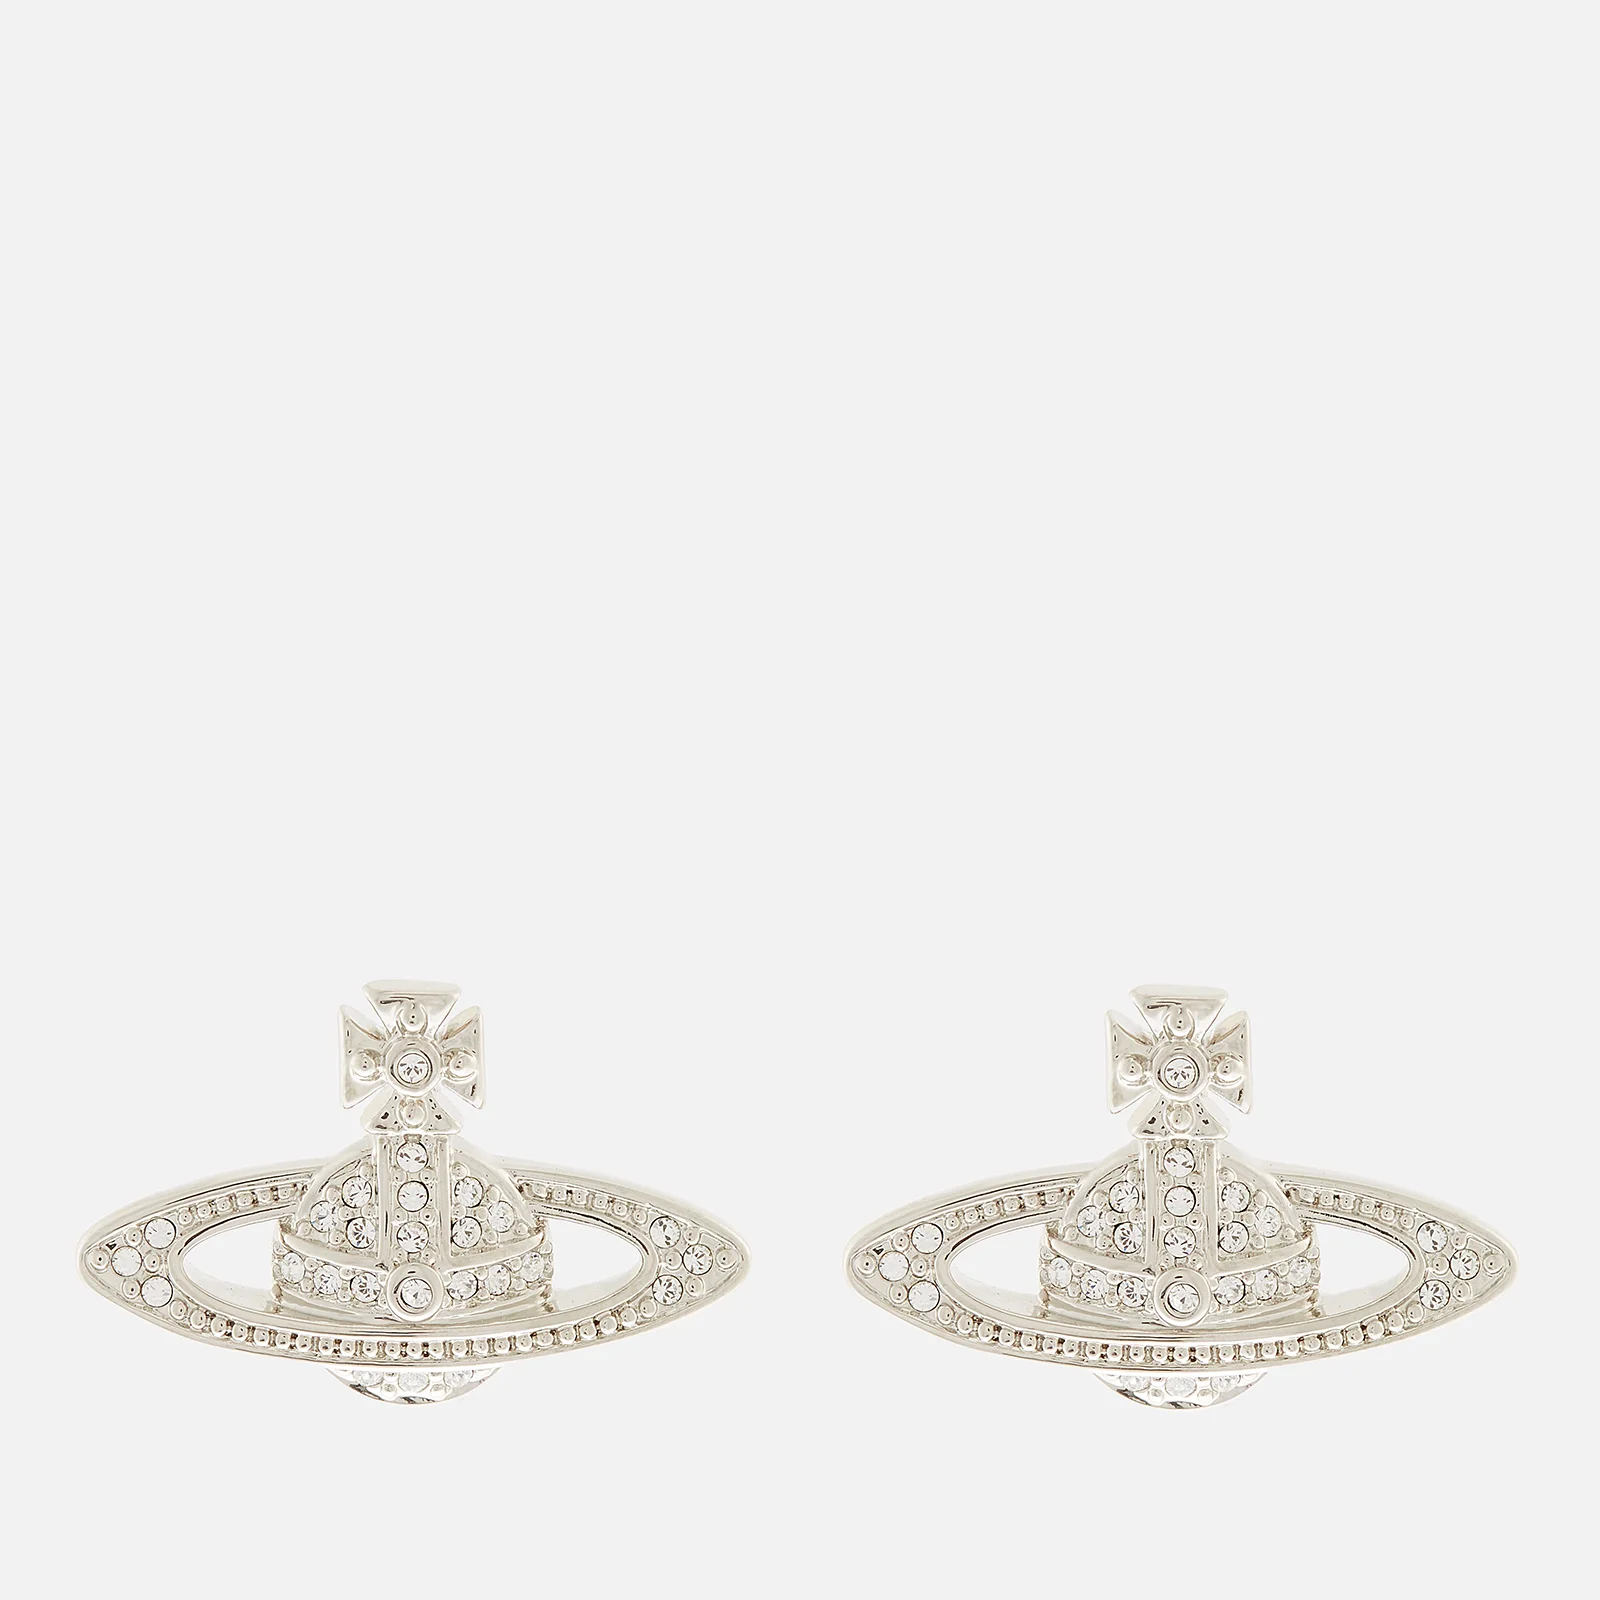 Vivienne Westwood Women's Minnie Bas Relief Earrings with Swarovski Crystals - Platinum/Crystal Image 1